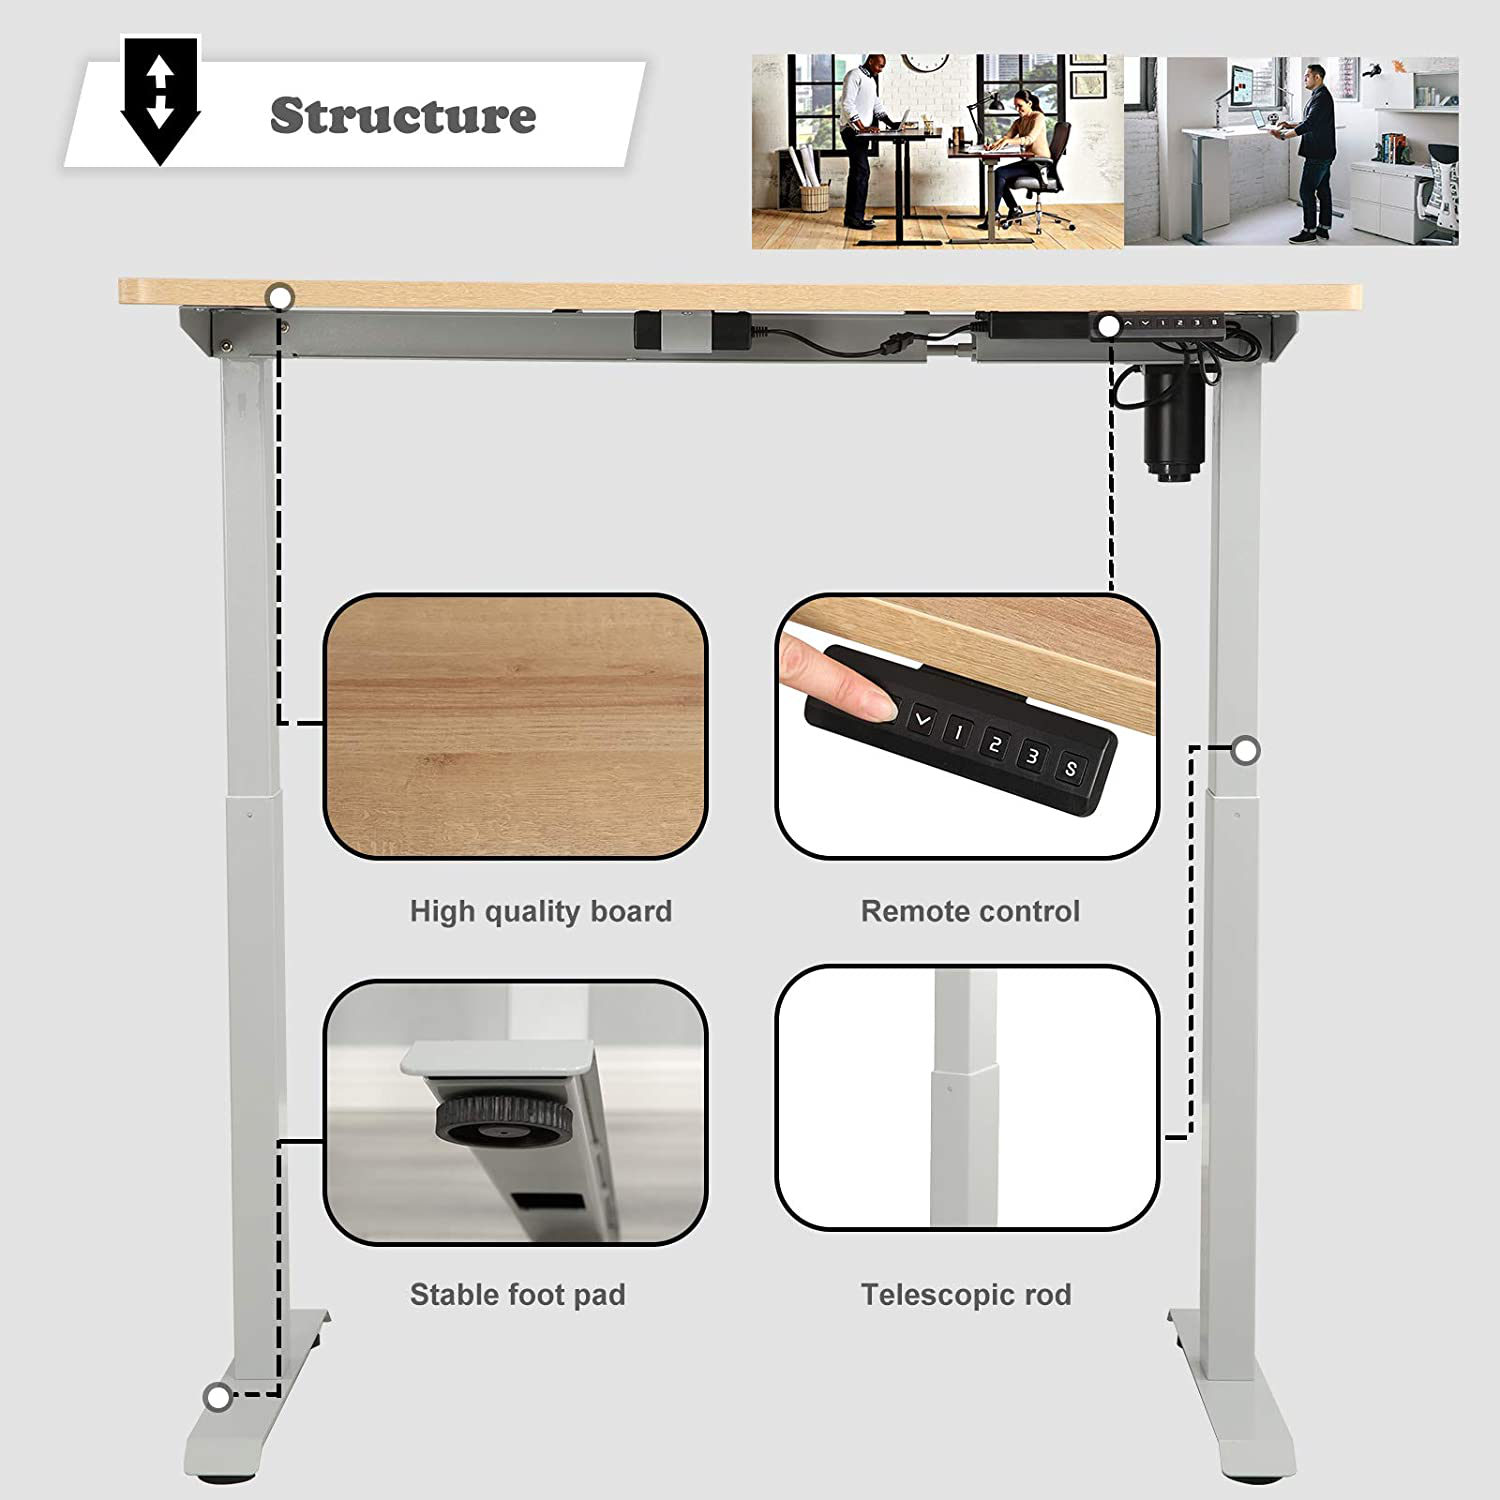 Jarvis Maple Desk Height Adjustable Electric Standing Desk 